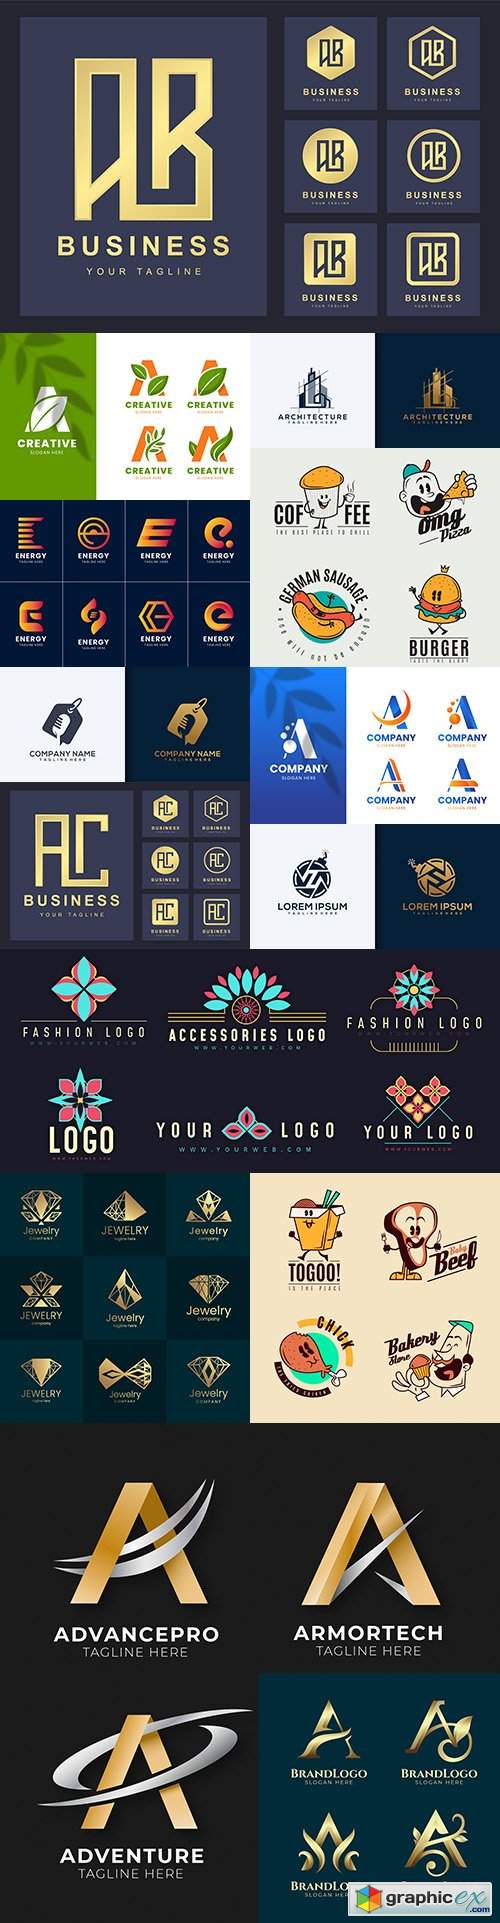  Brand name company business corporate logos design 19 